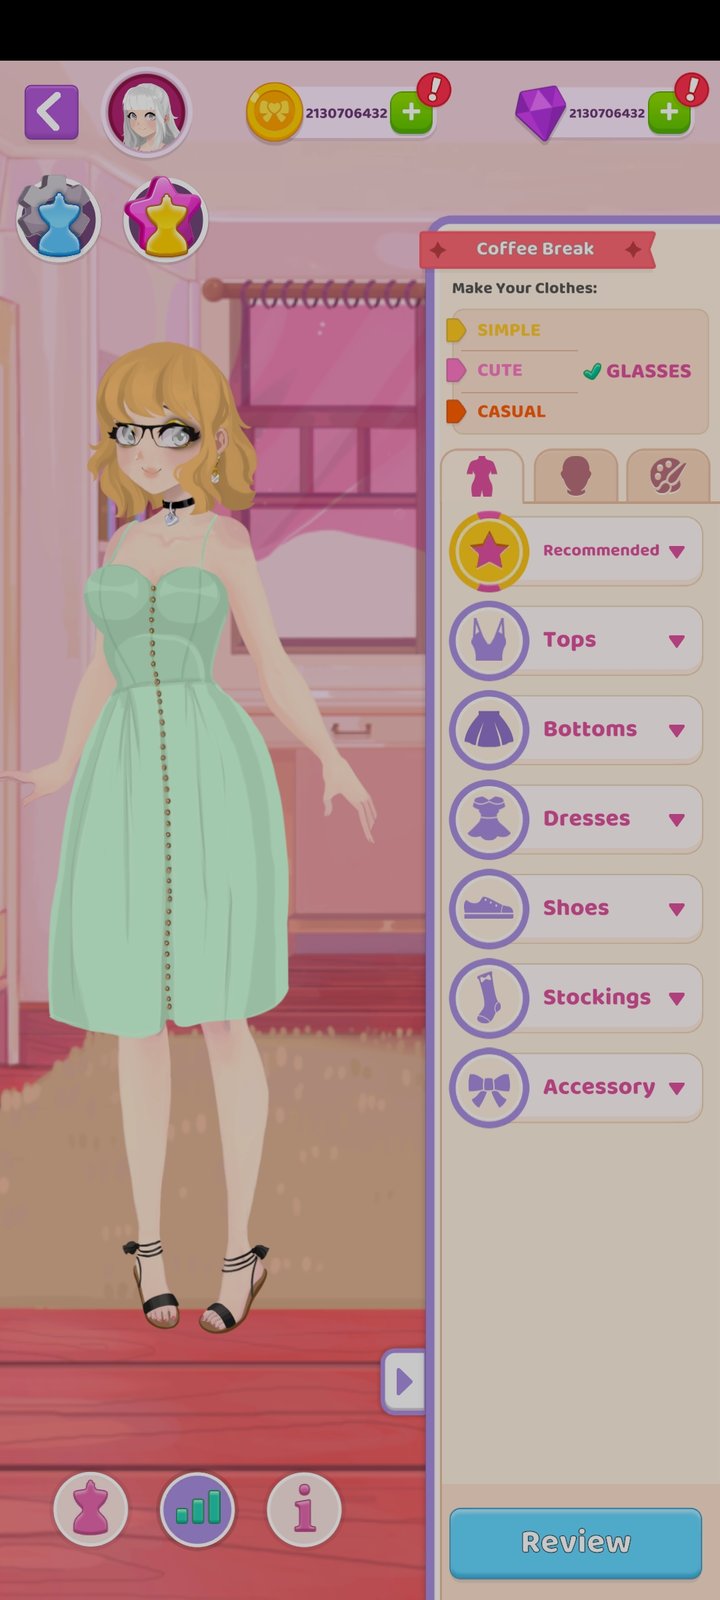 Lulu's Fashion: Dress Up Games – Apps no Google Play